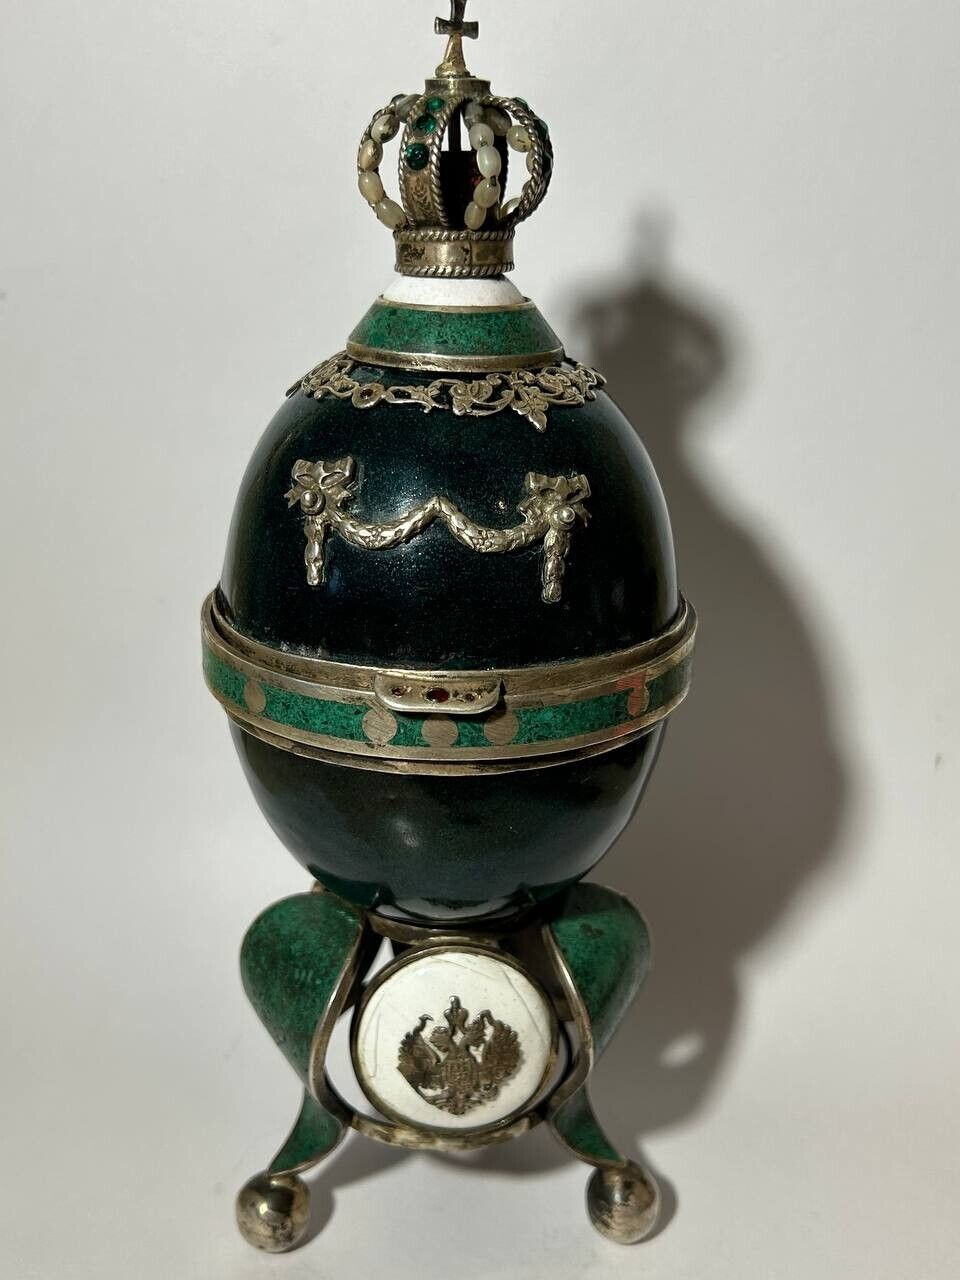 Antique Imperial FABERGE Silver & Enamel Easter Egg Desk Clock Nicholas II c1900